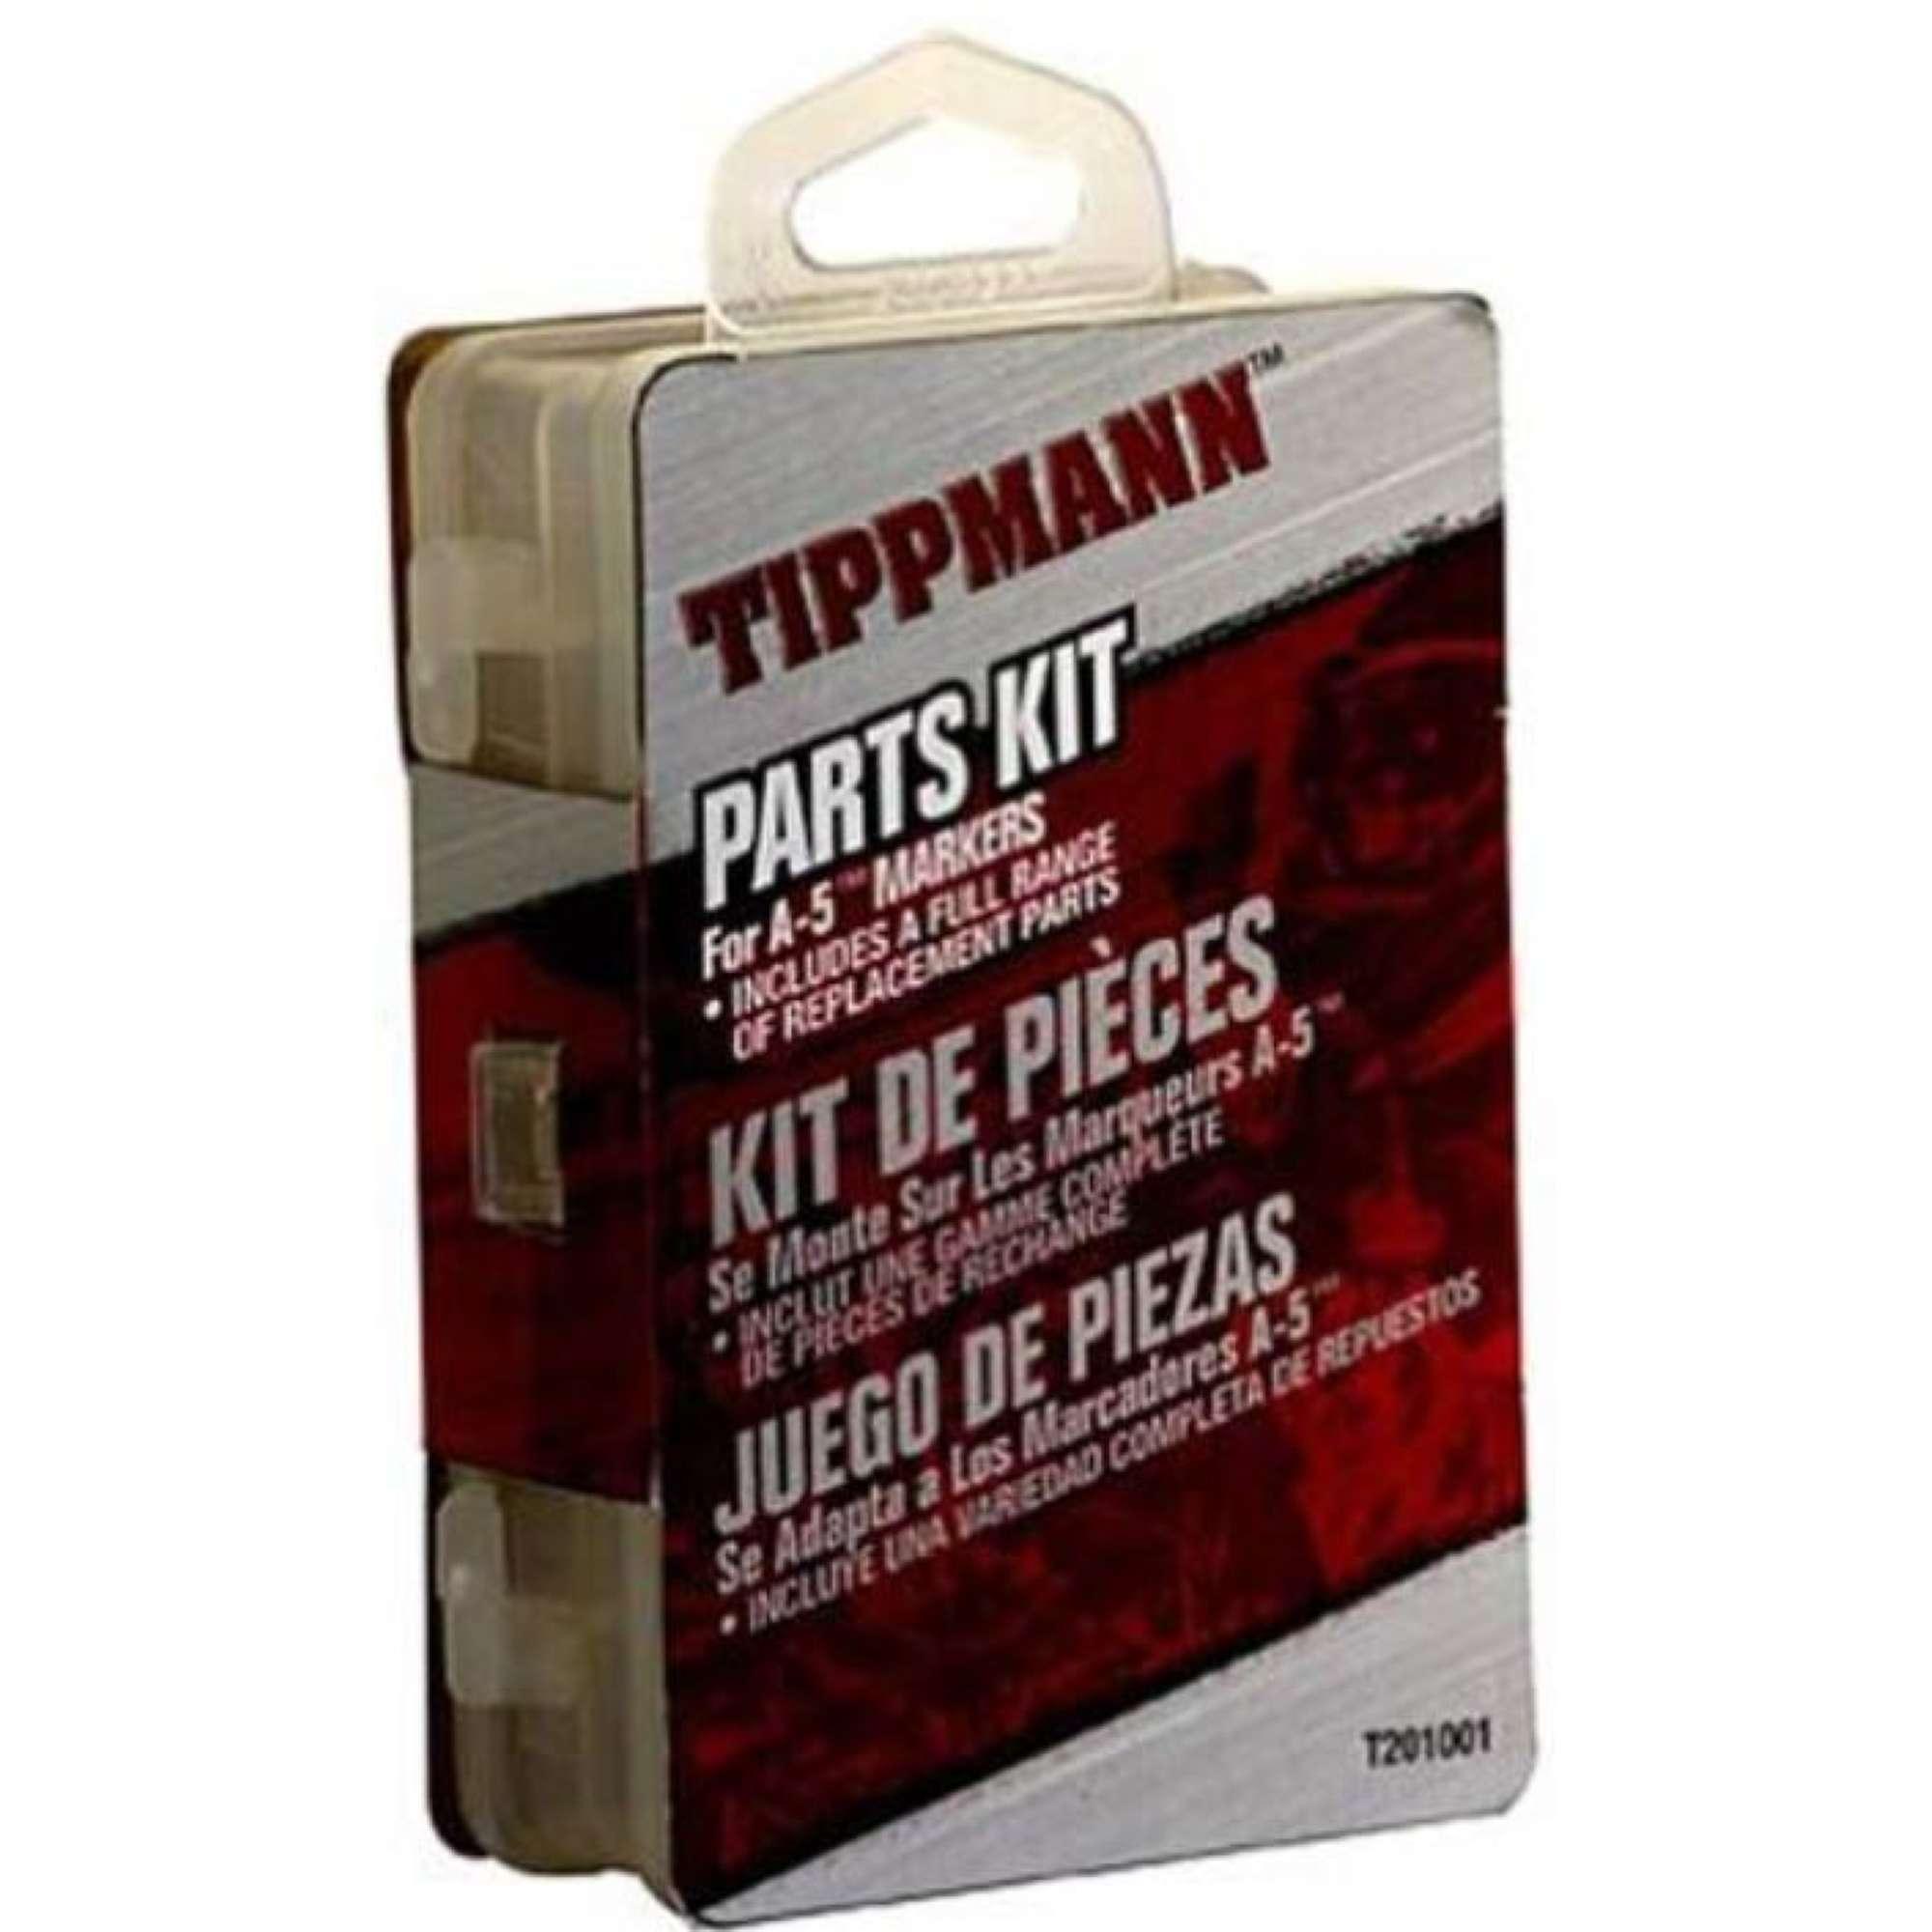 Tippmann A-5 Paintball Marker Universal Parts Kit